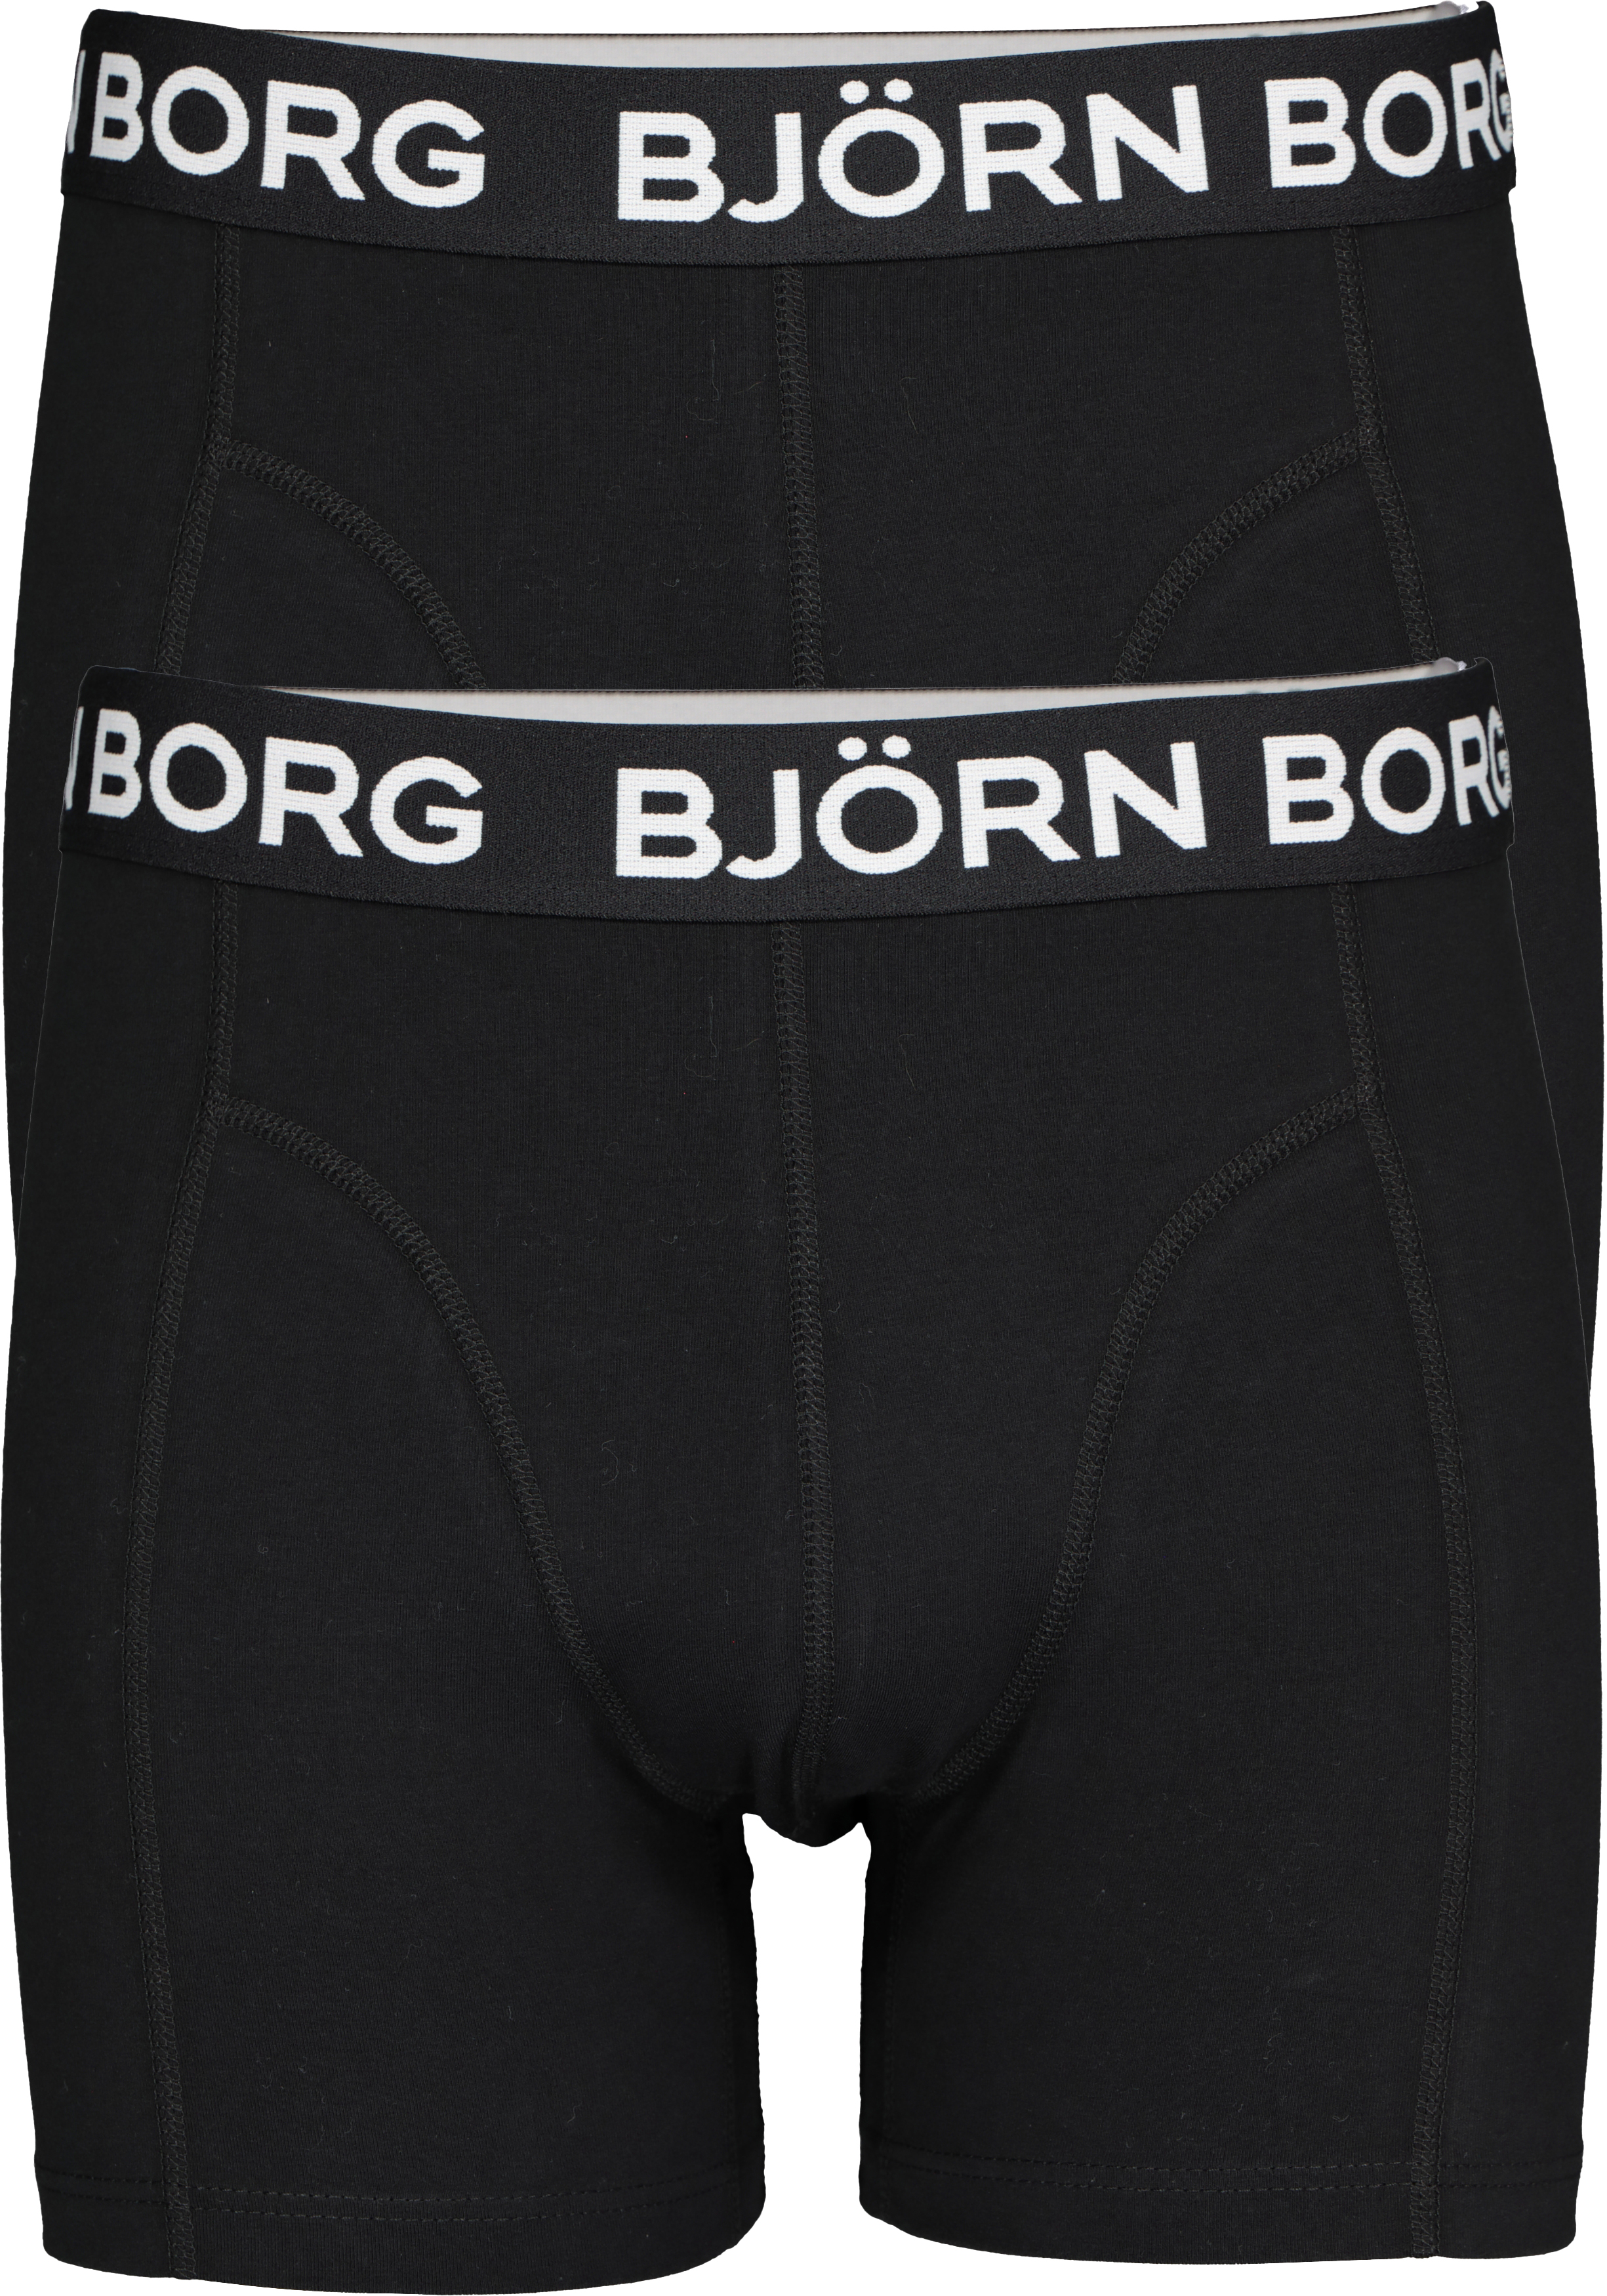 krant masker Trouw Bjorn Borg boxershorts Core (2-pack), heren boxers normale lengte, zwart -  Zomer SALE tot 50% korting